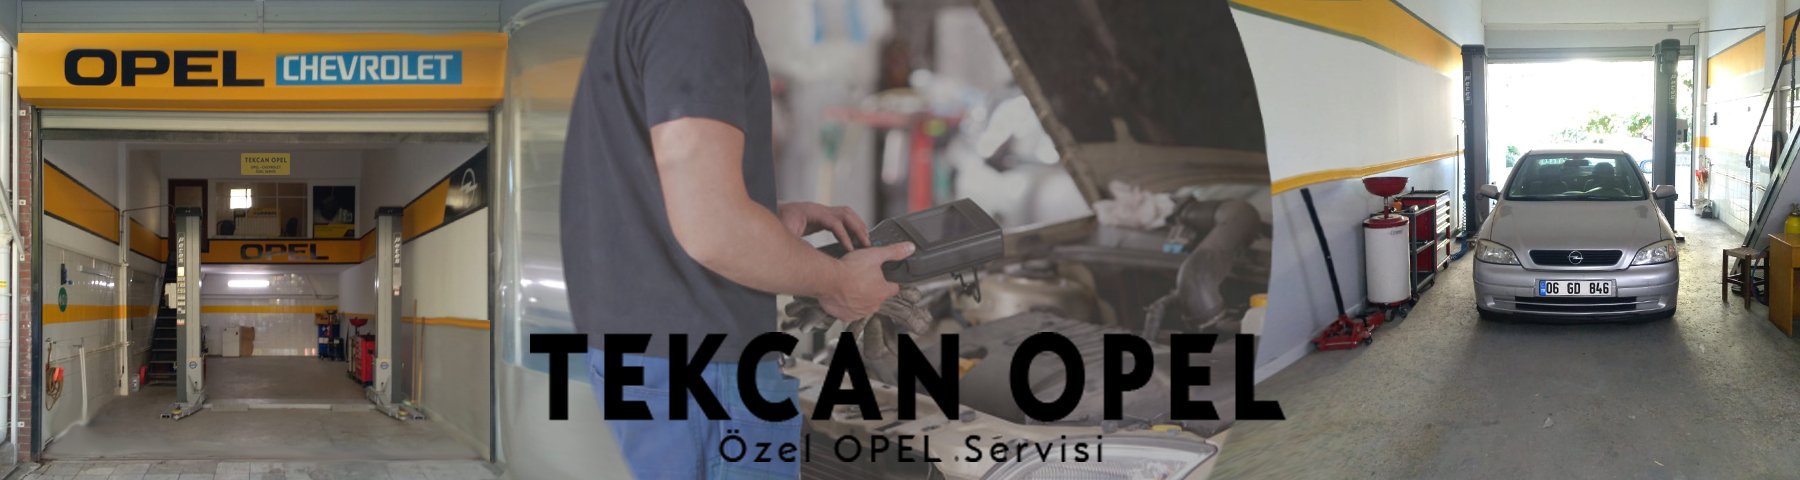 Opel Chevrolet Mekanik Onarim